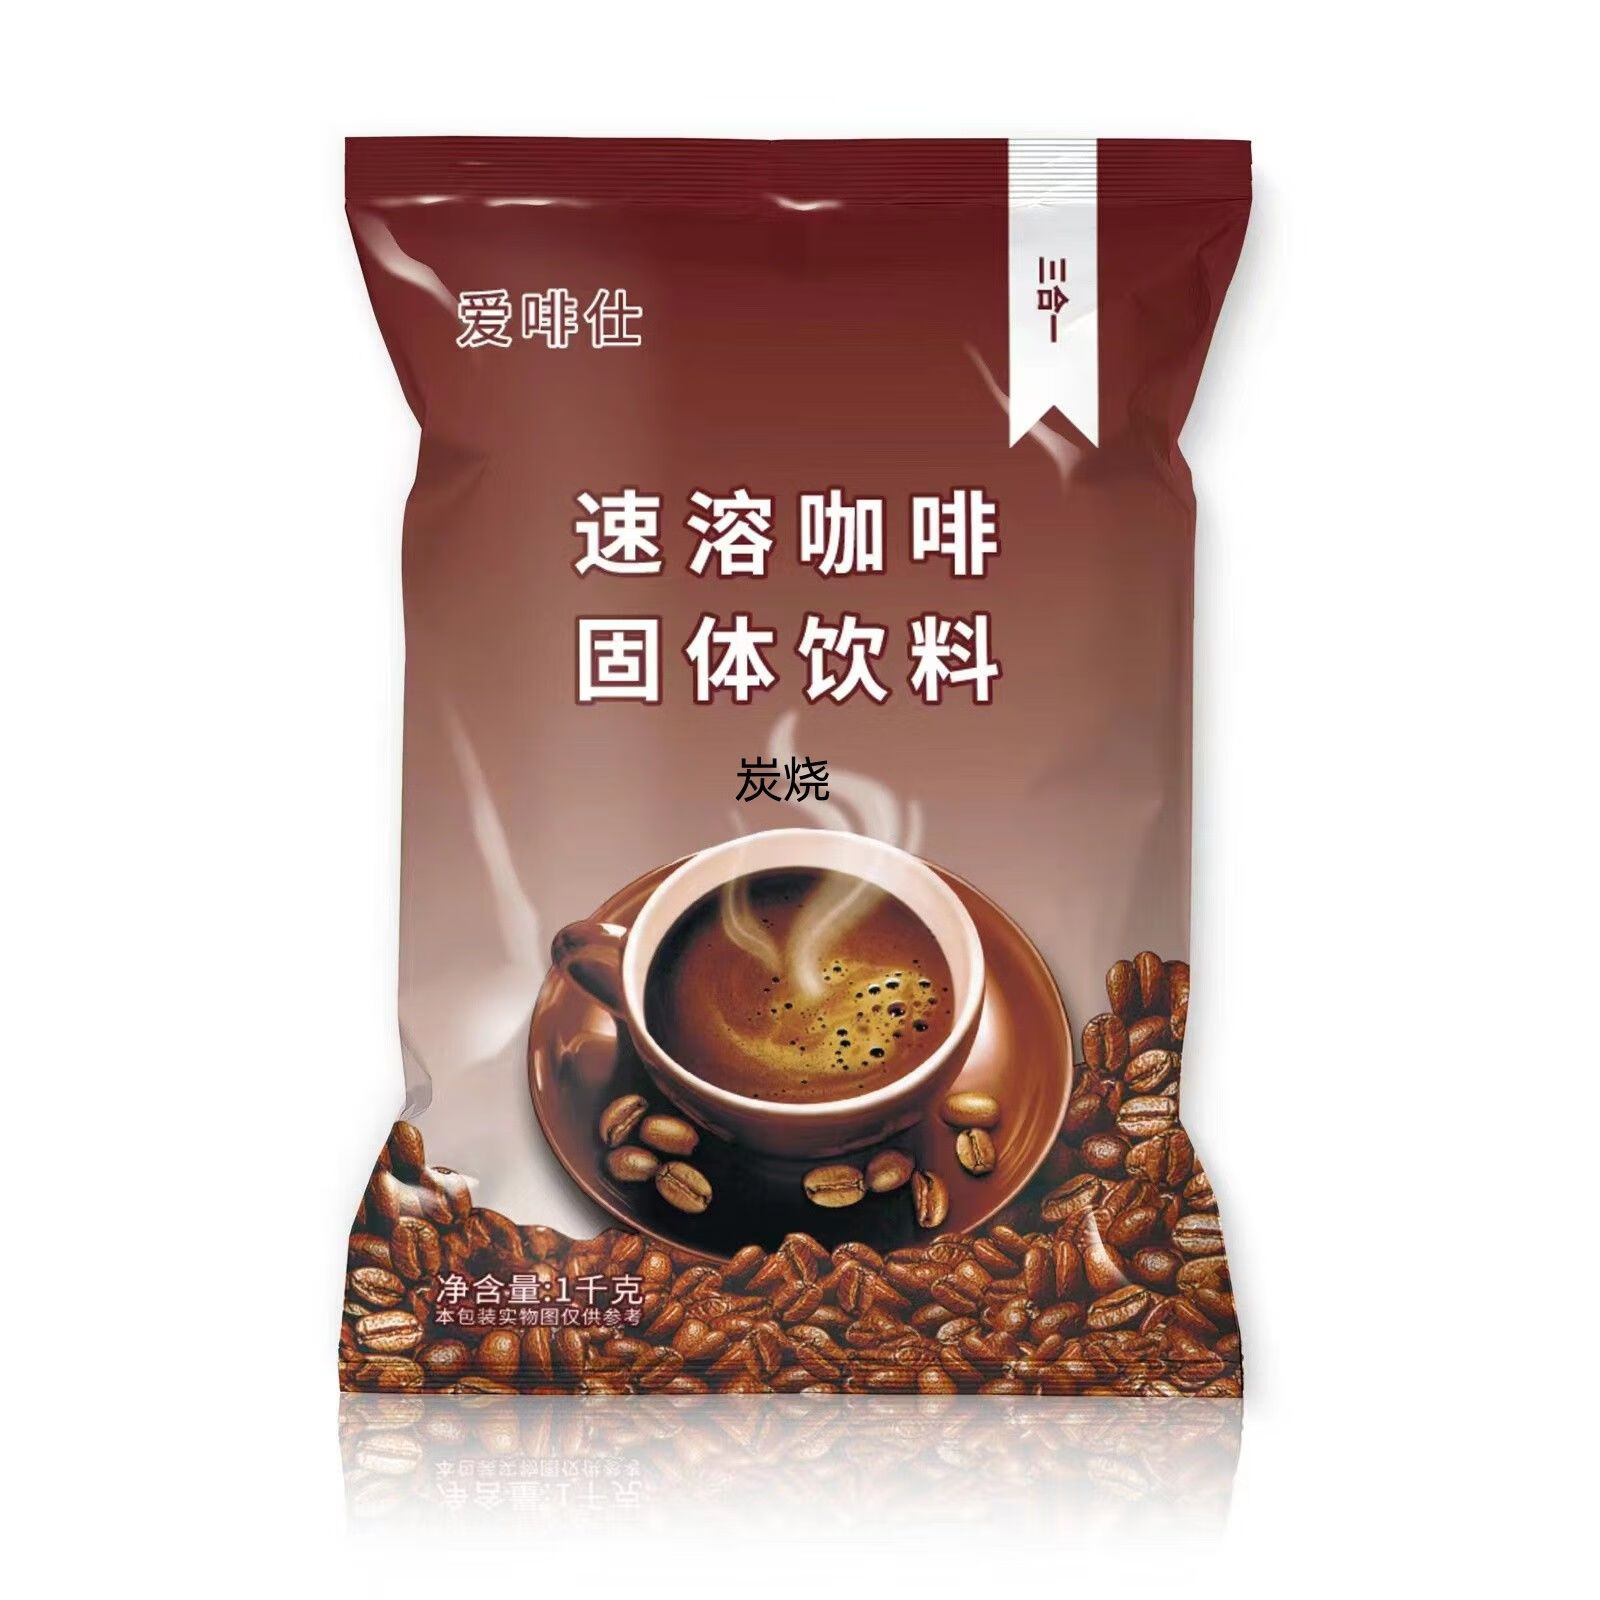 Derenruyu咖啡粉1000克大袋装三合一原味咖啡奶茶店咖啡机自助咖啡原料批发 炭烧咖啡1000克/袋